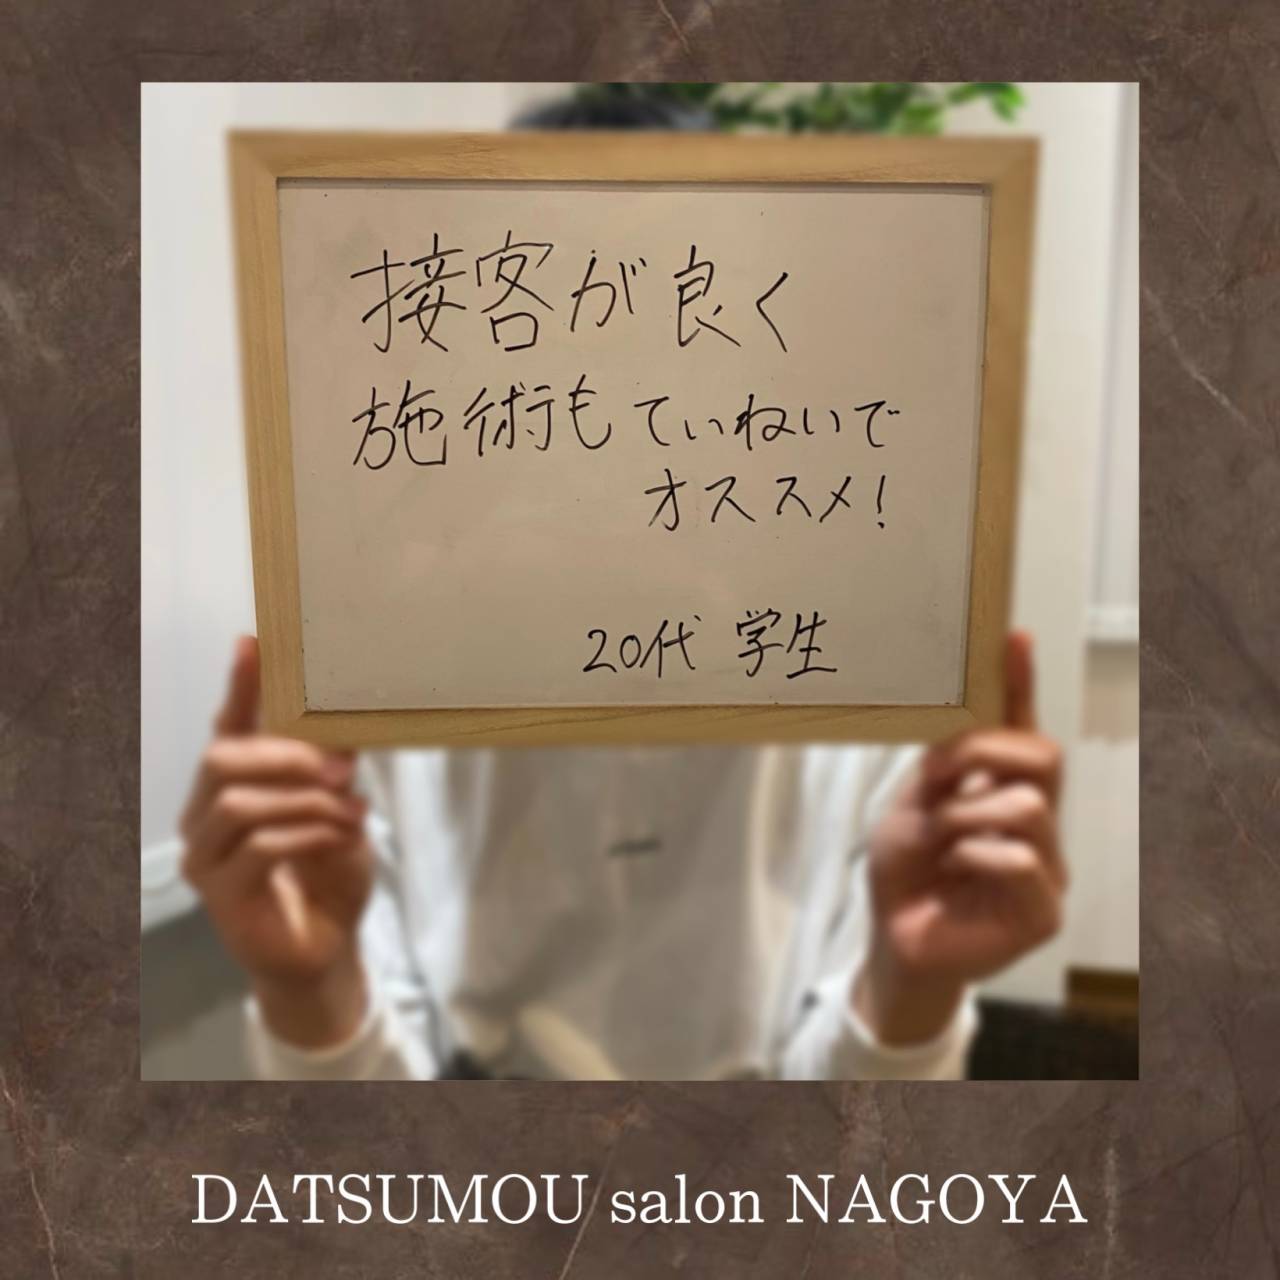 DATSUMOU salon NAGOYAの学割メニューがお得🙆🏻‍♀️✨